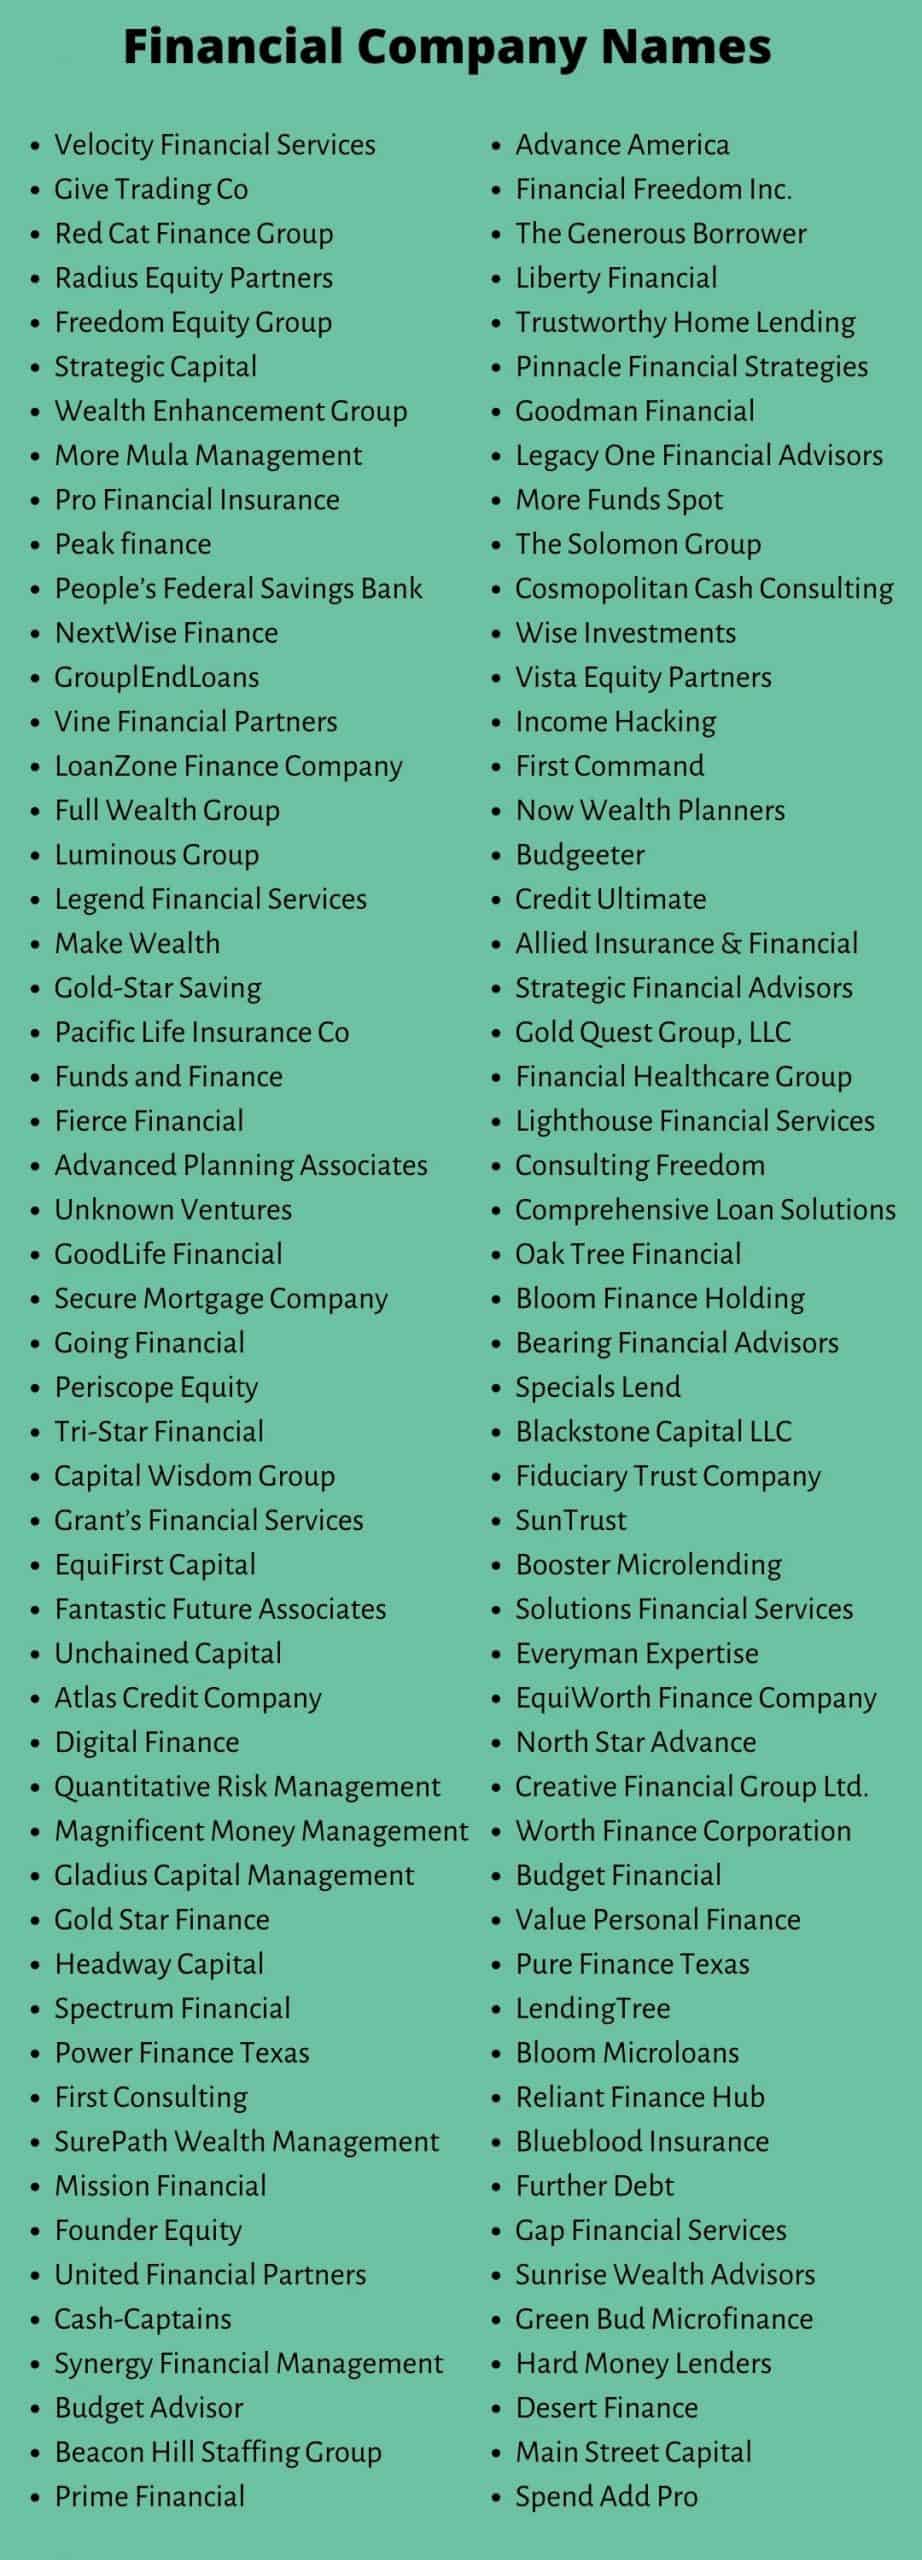 Financial Company Names